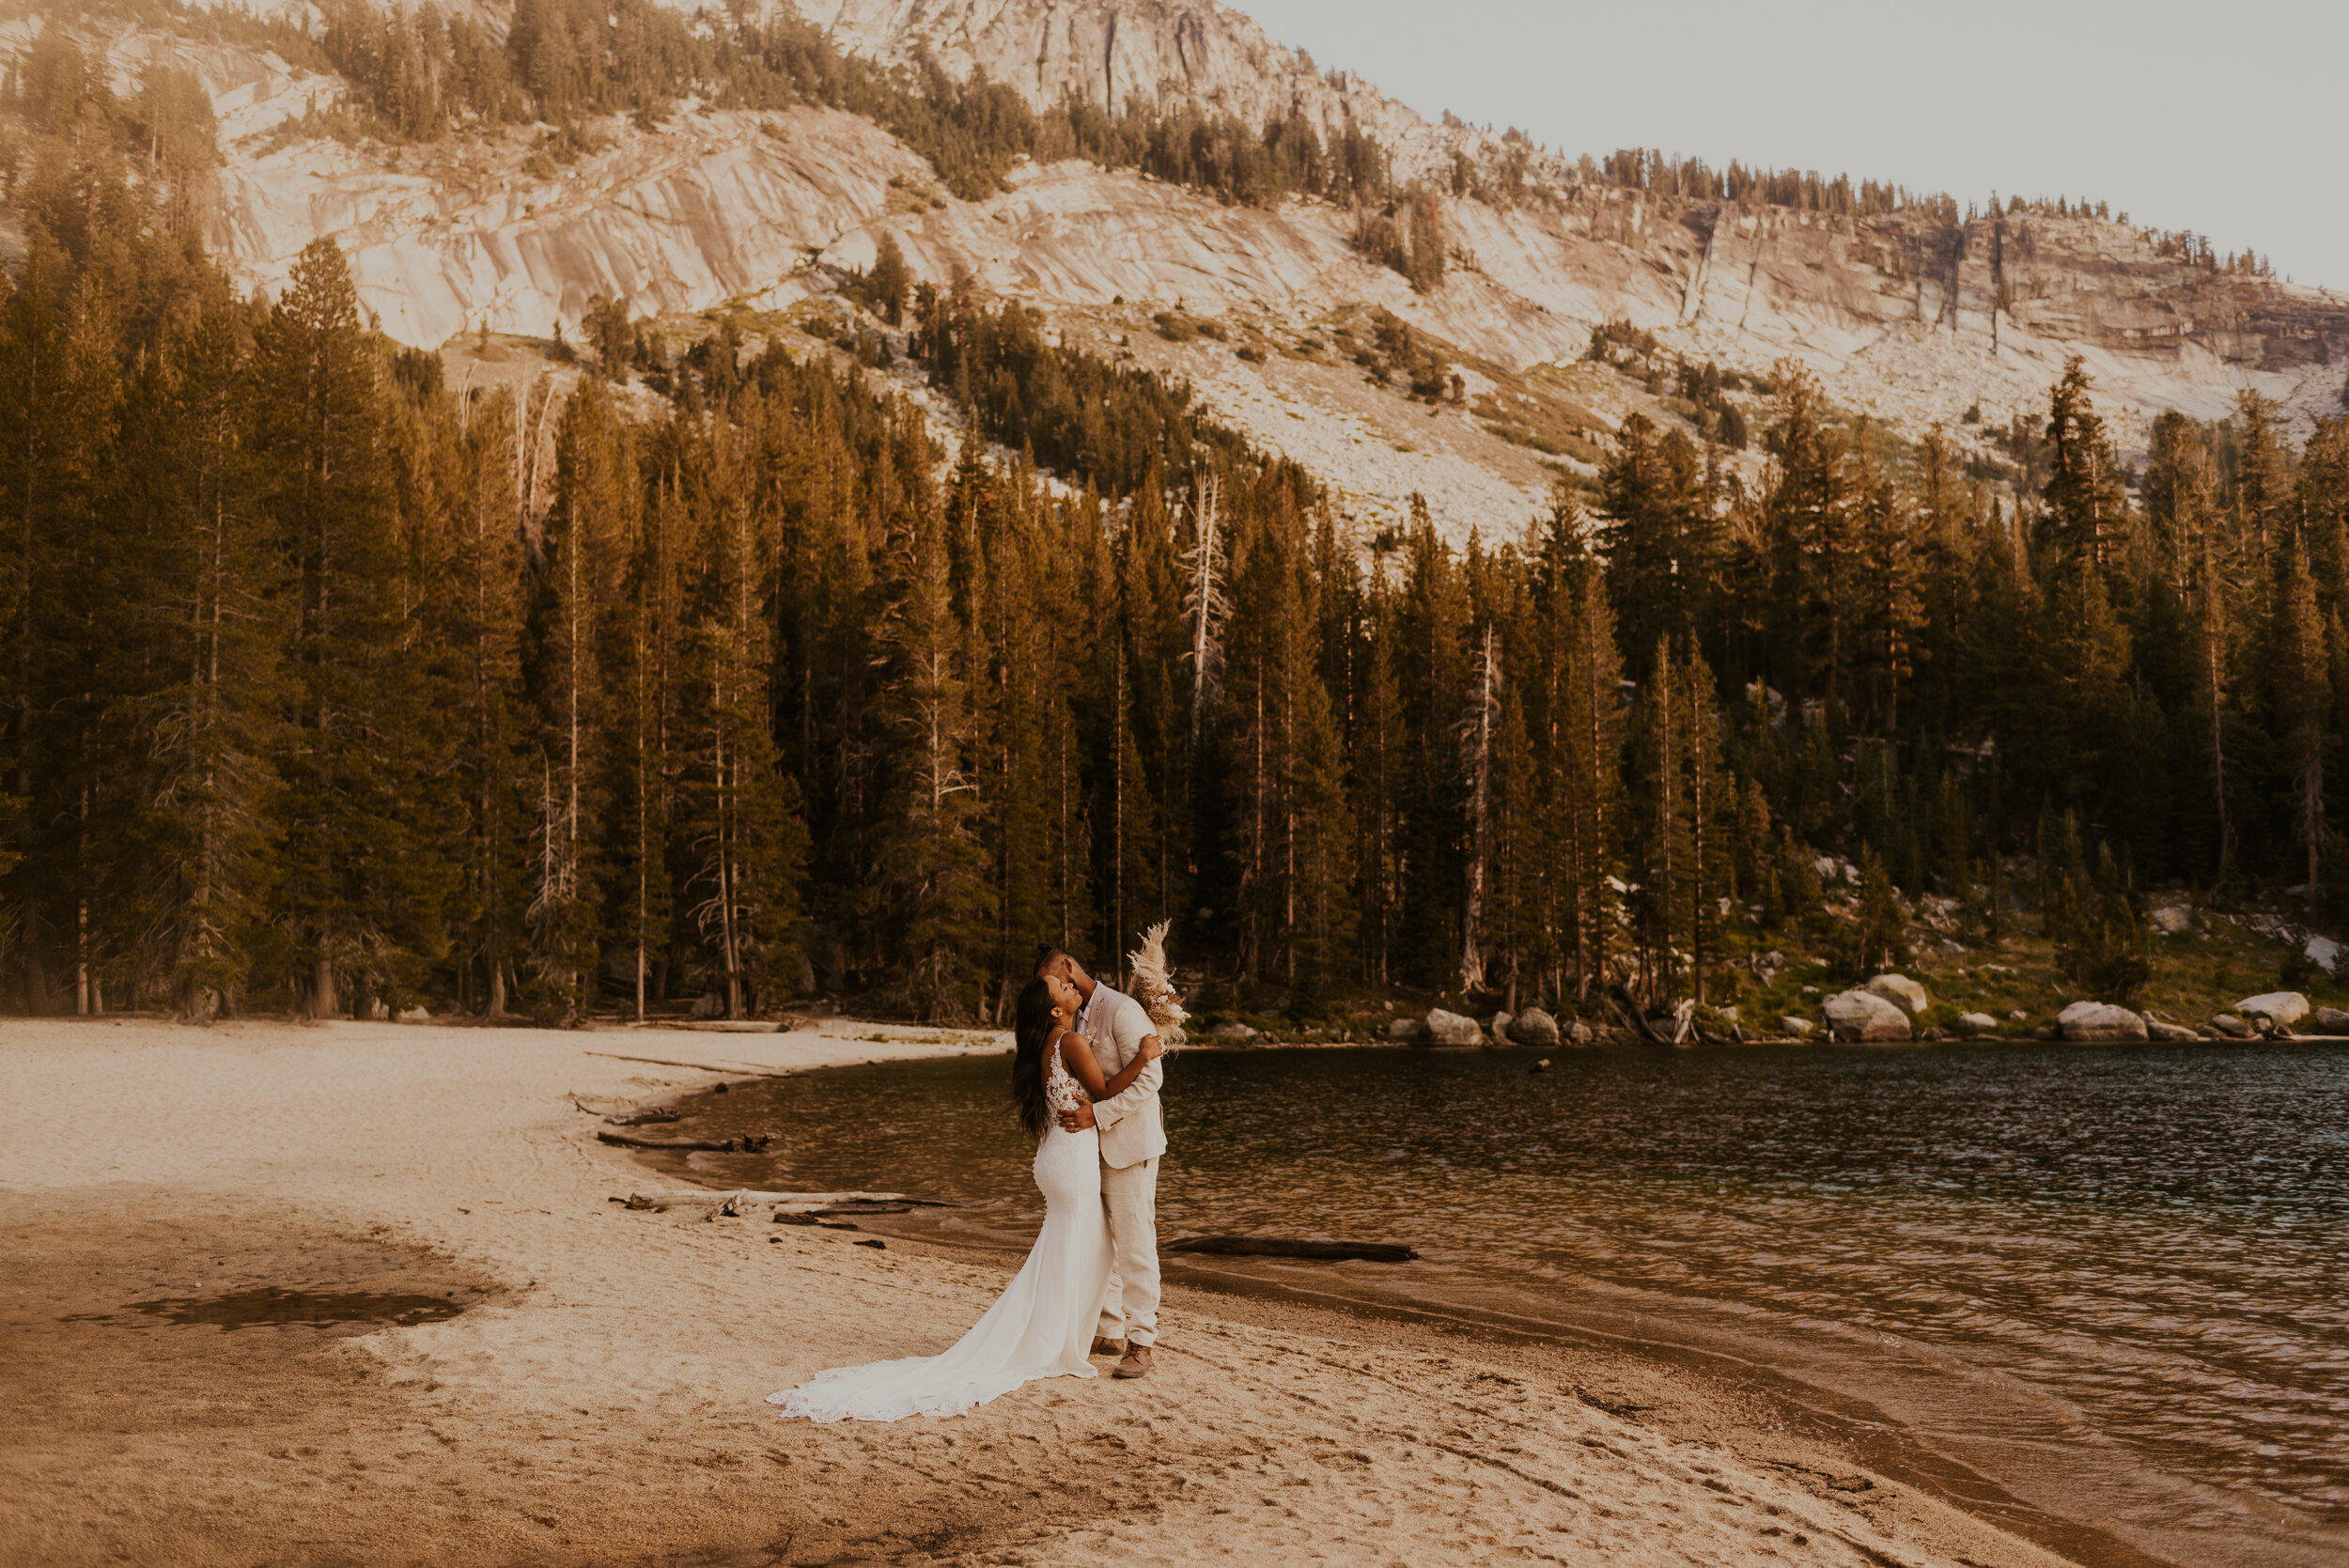 Tenaya Lake Elopement | Eloping in Yosemite National Park | Adventure Elopement Wedding | Yosemite Elopement Photographer 